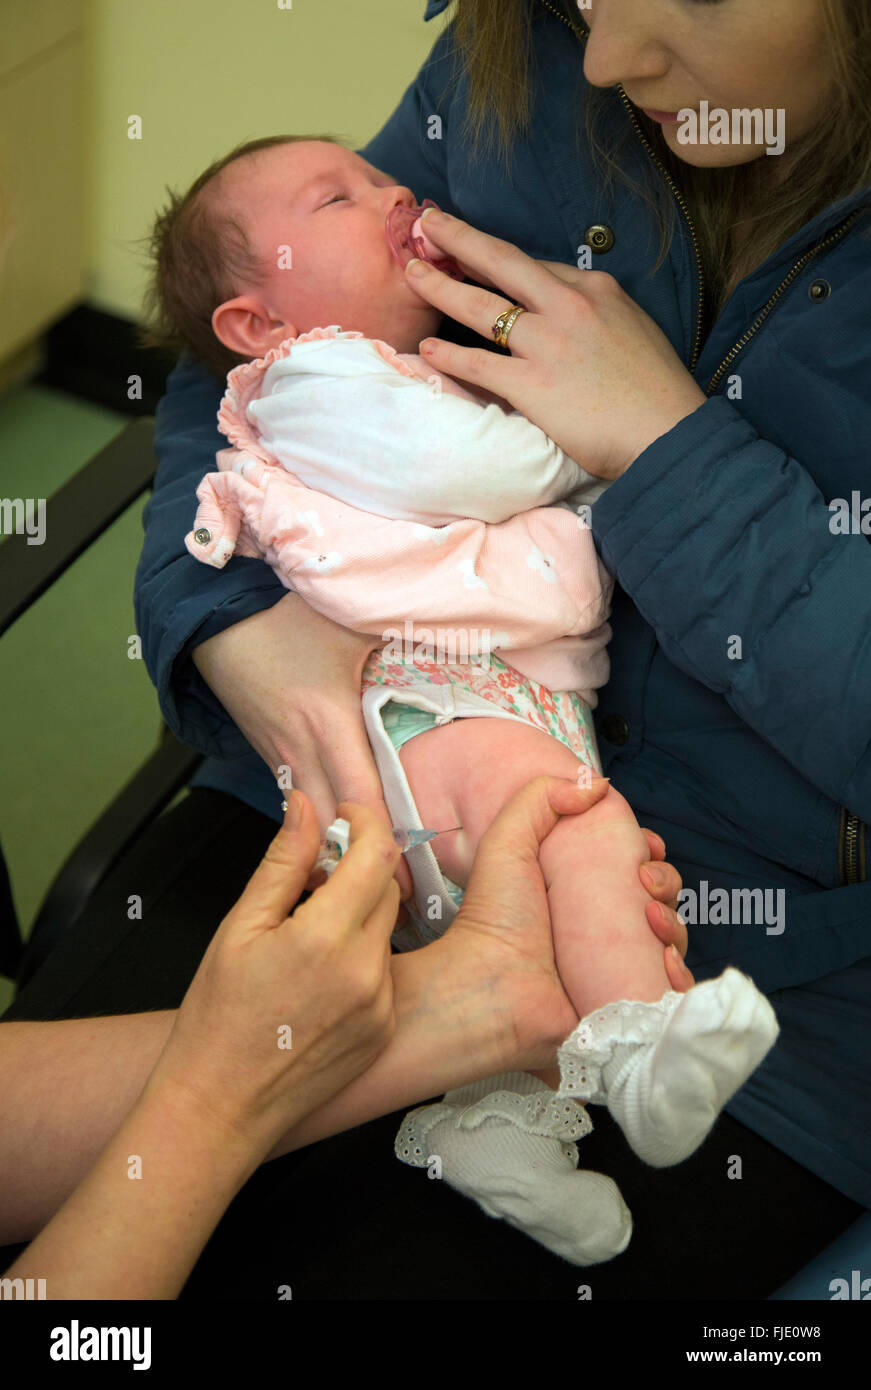 Baby having immunization vaccination injections Stock Photo